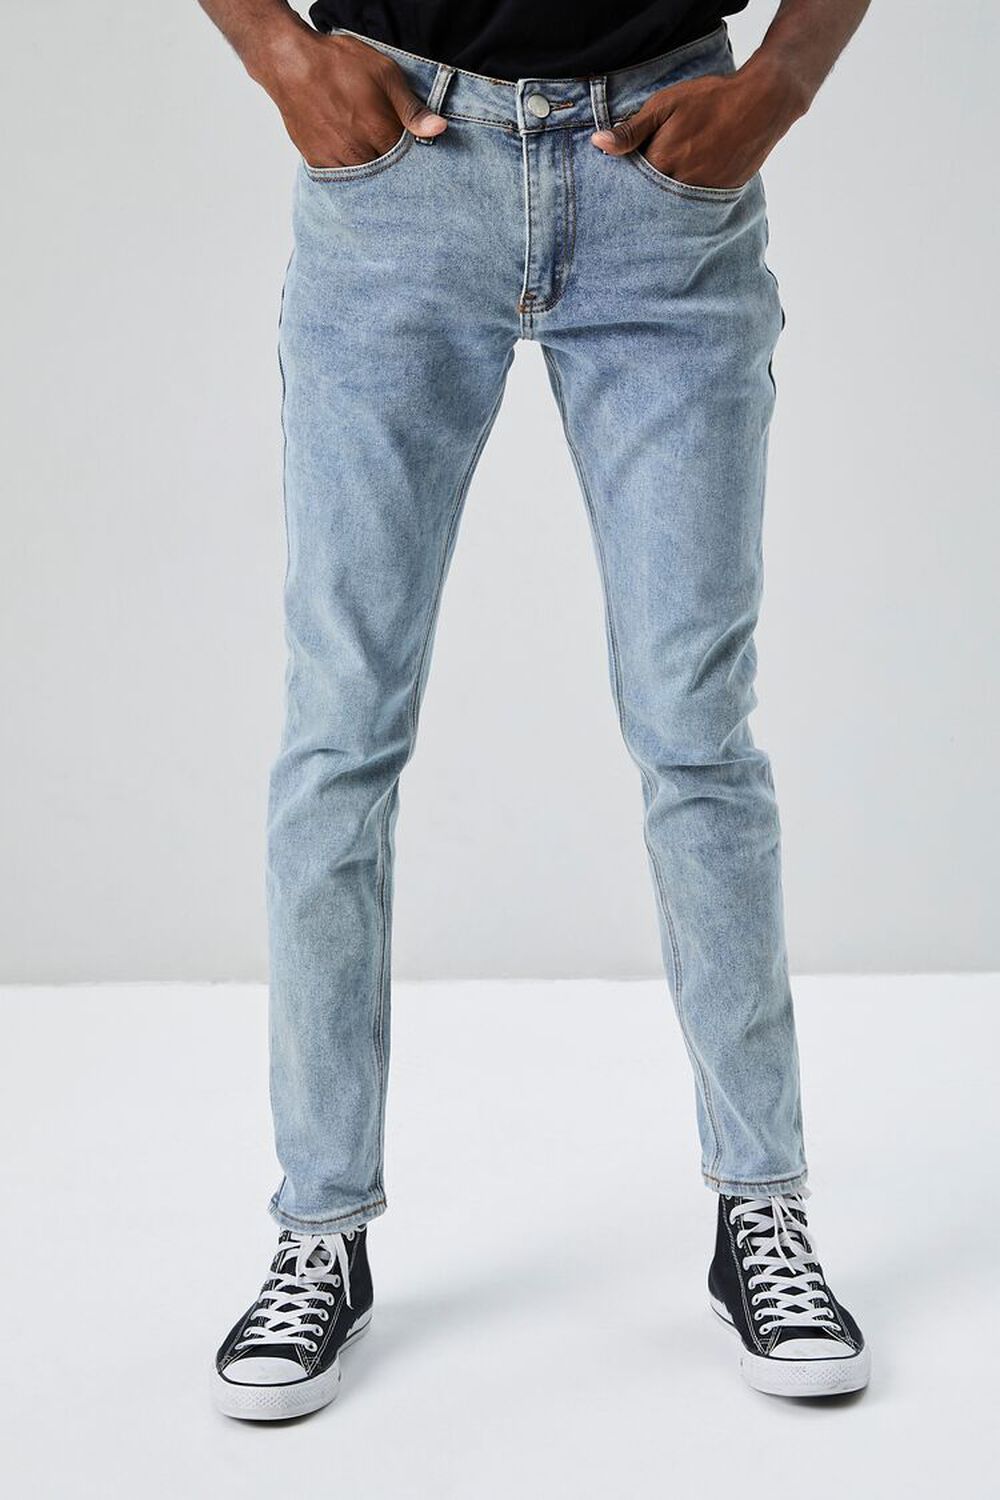 Men's Slim Fit Jeans - FOREVER 21